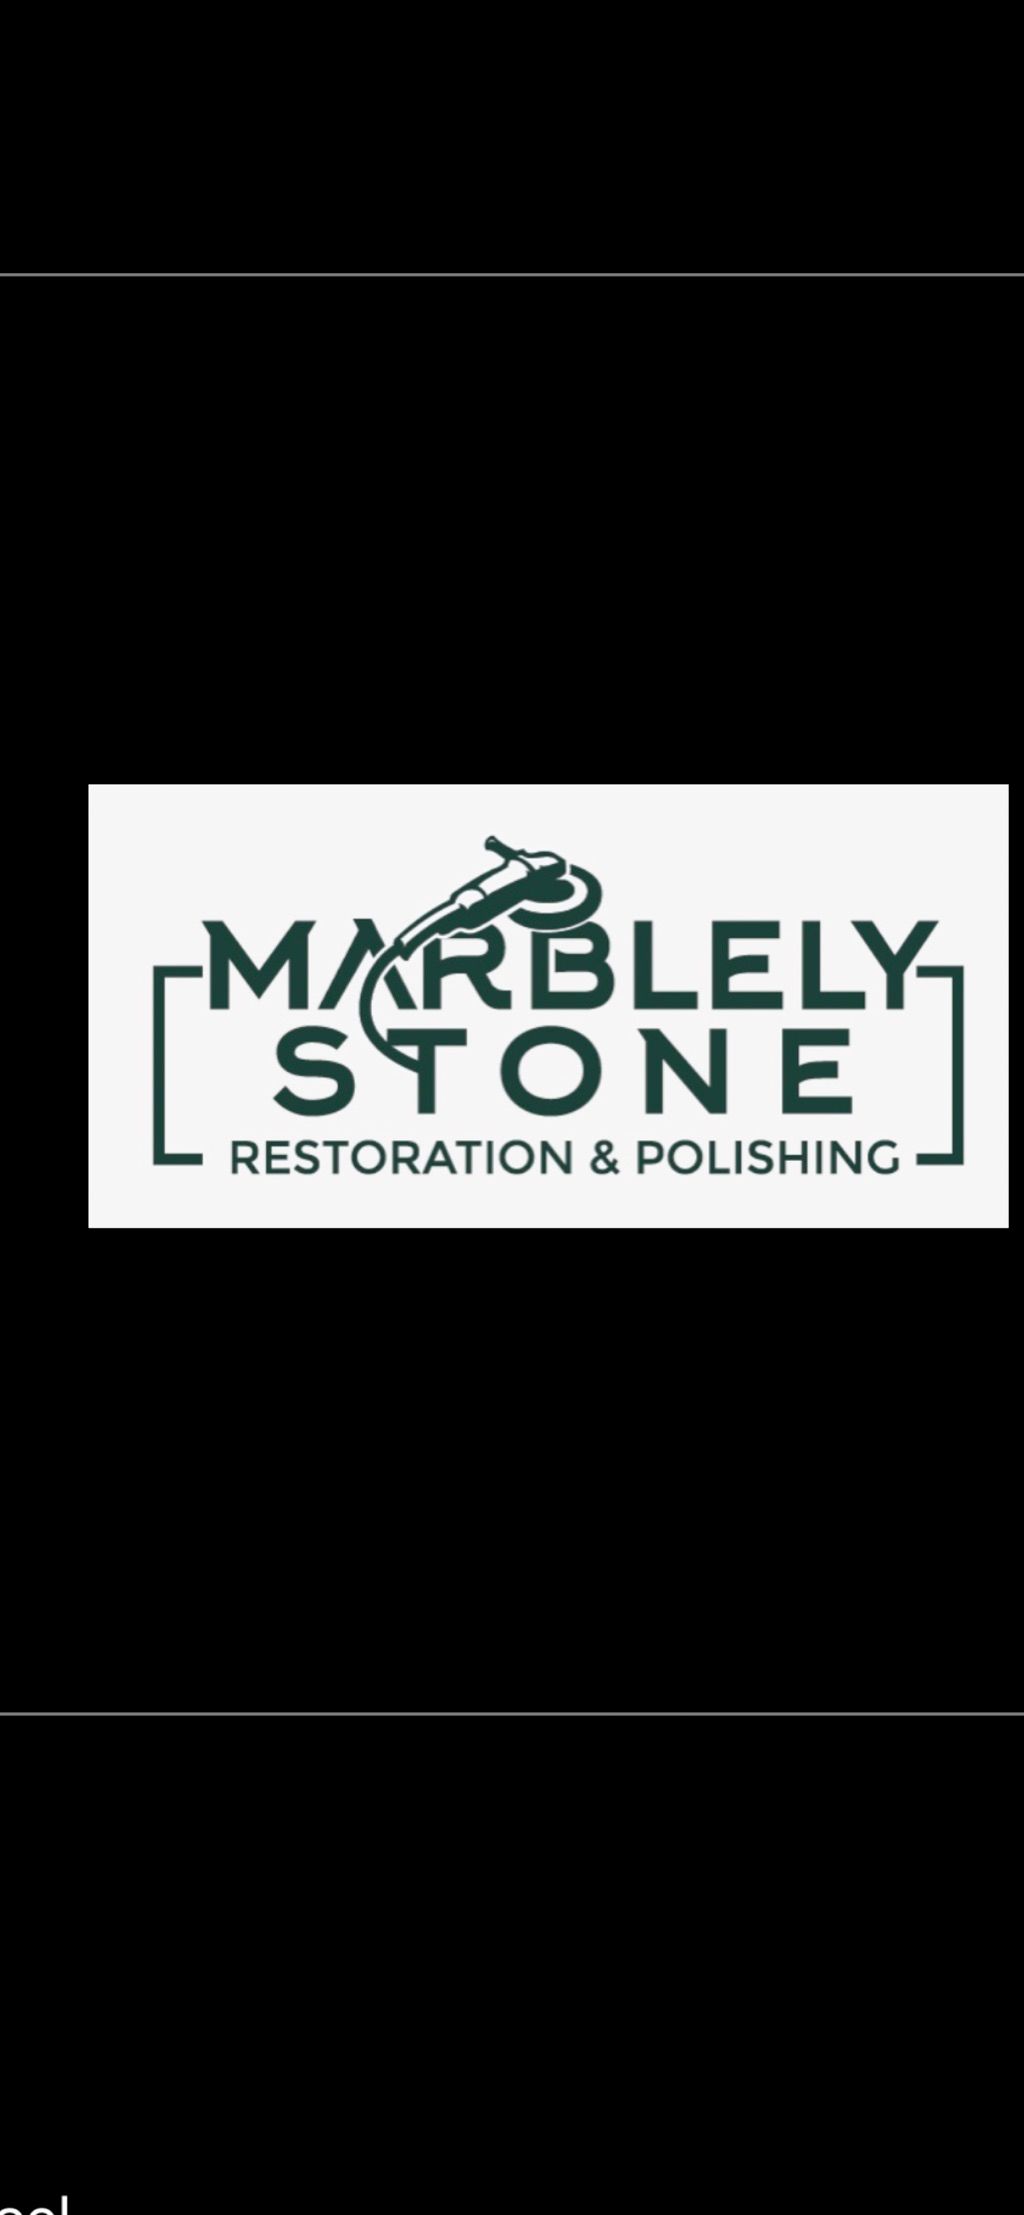 MarblelyStone